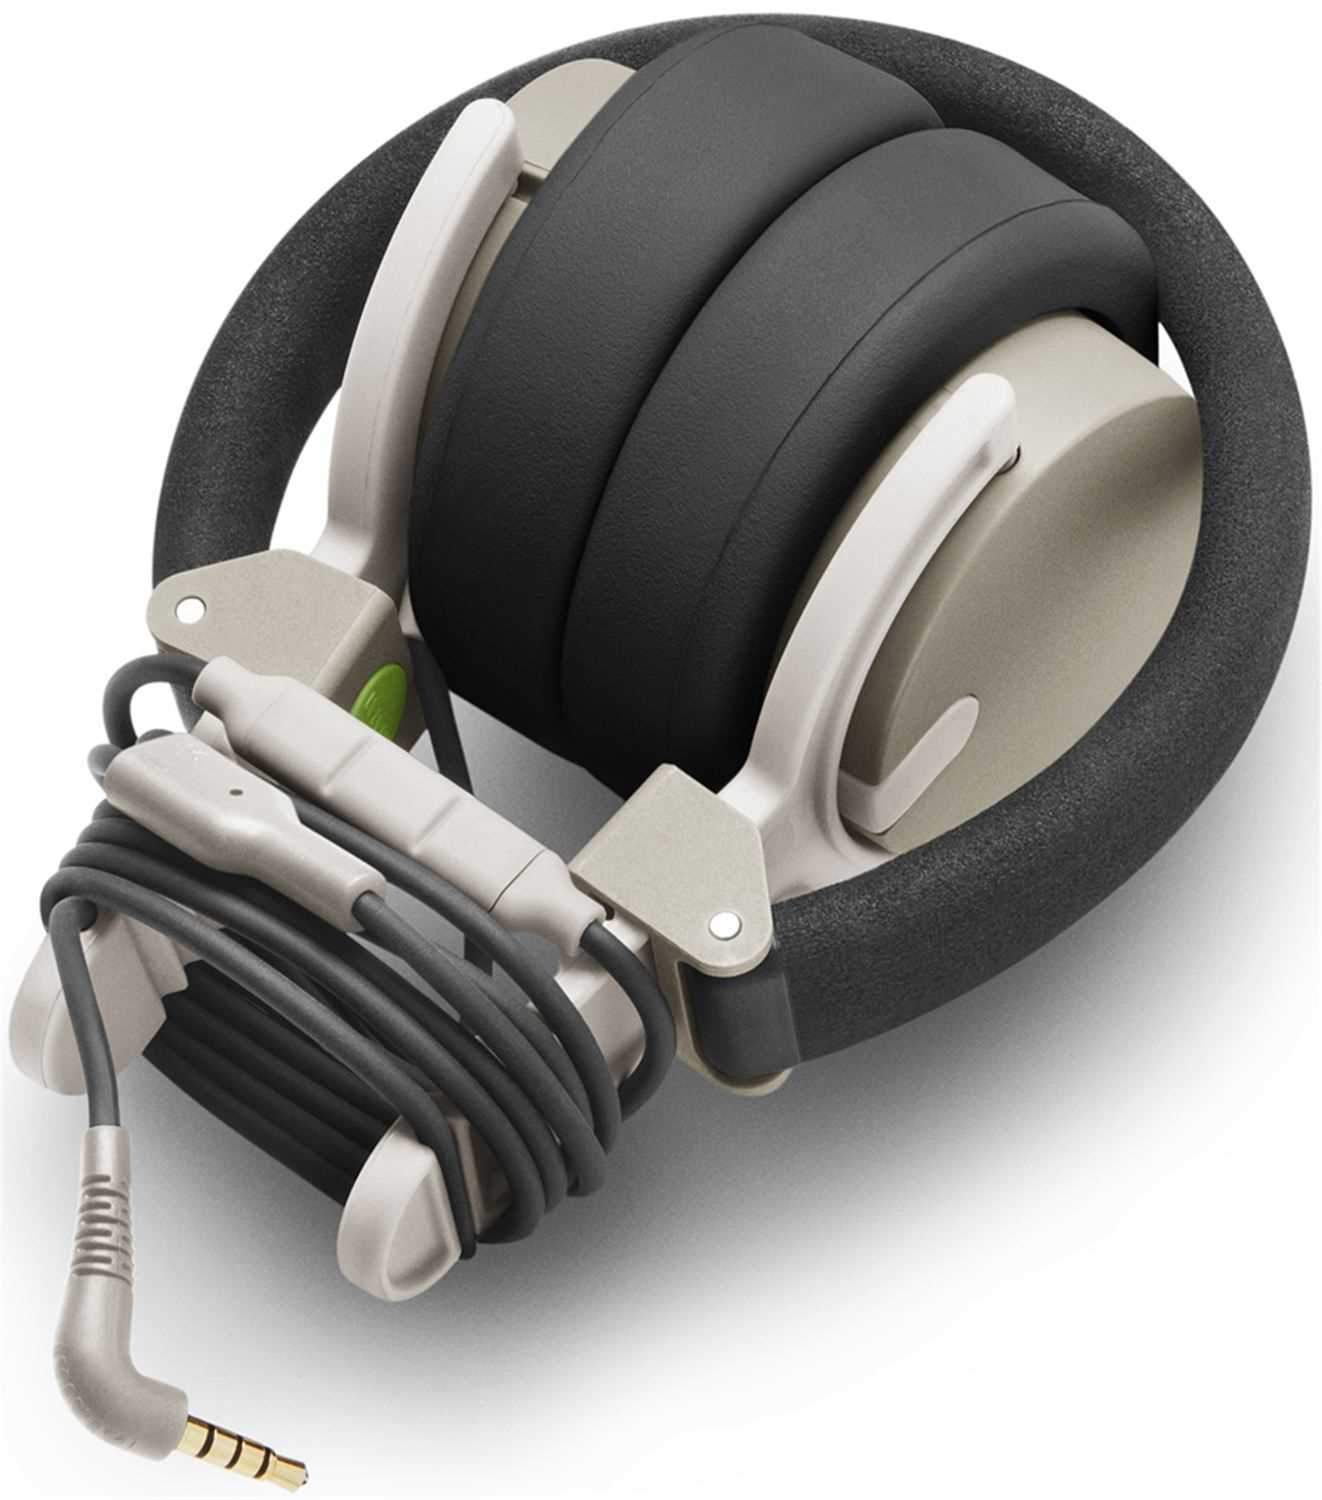 AIAIAI Capital Headphones - Dessert Green - ProSound and Stage Lighting